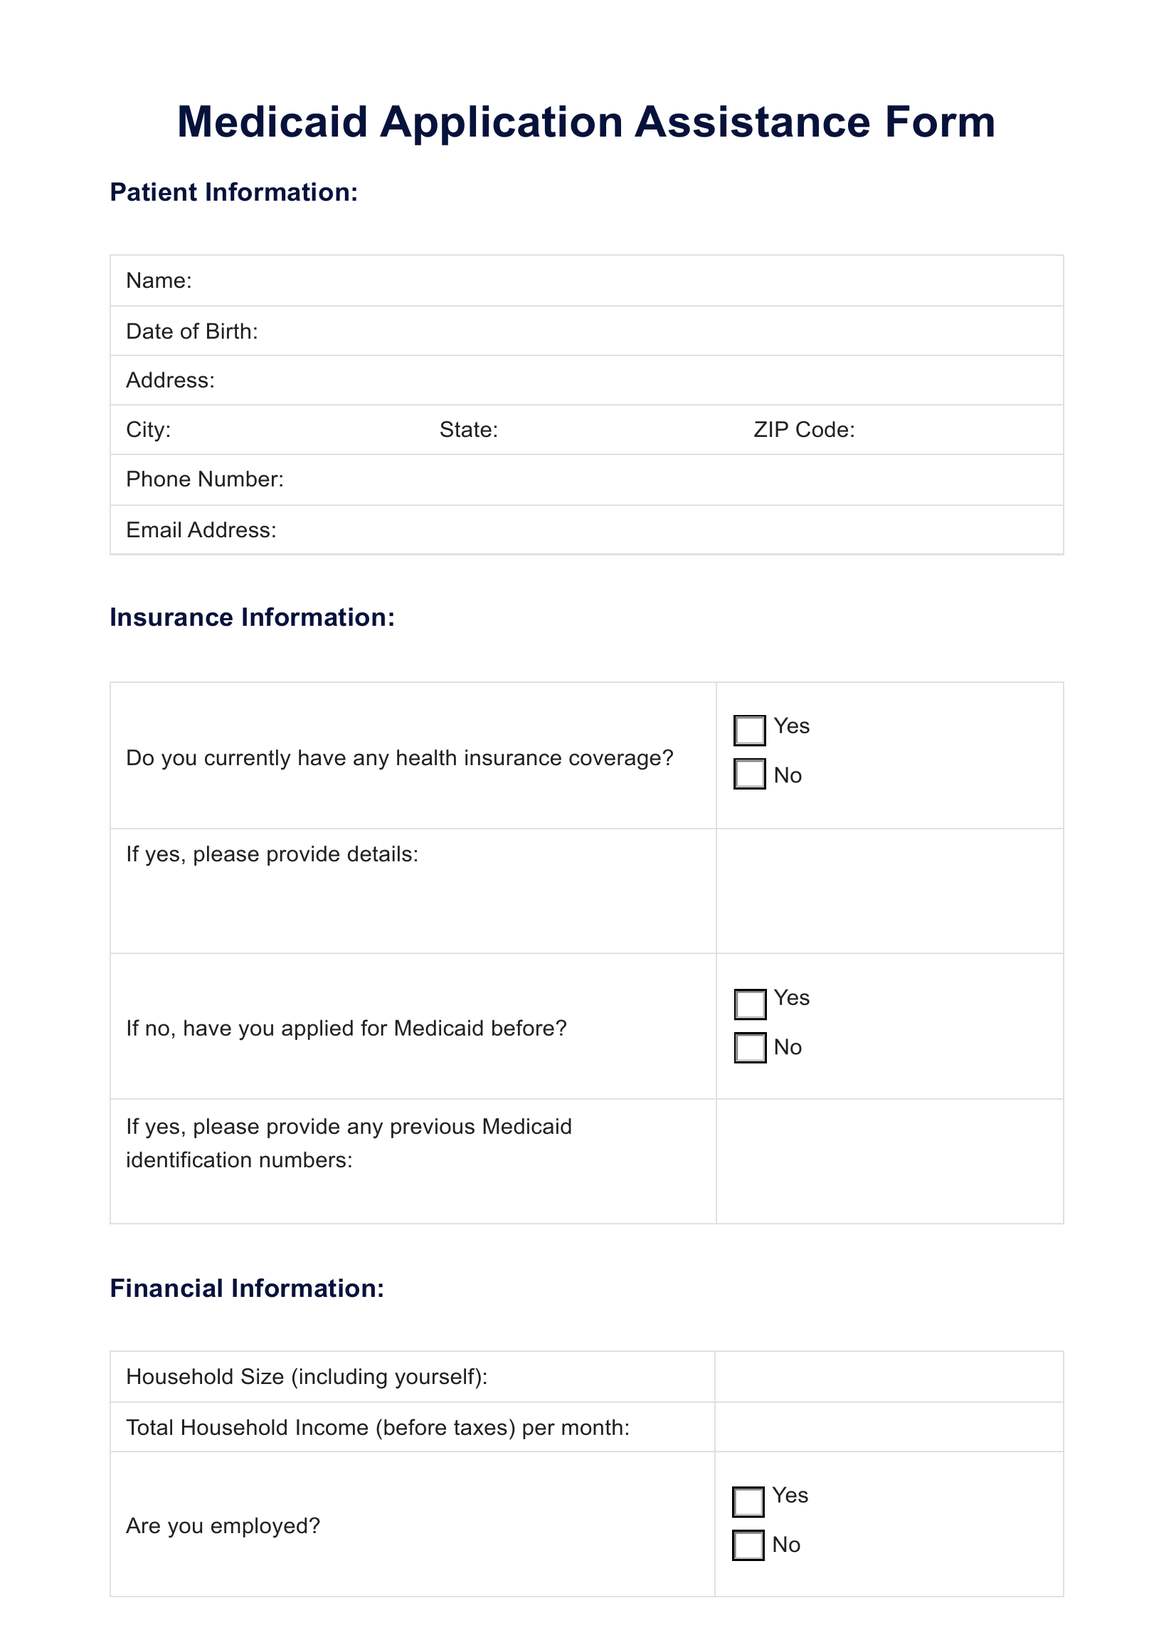 Medicaid Renewal Form PDF Example